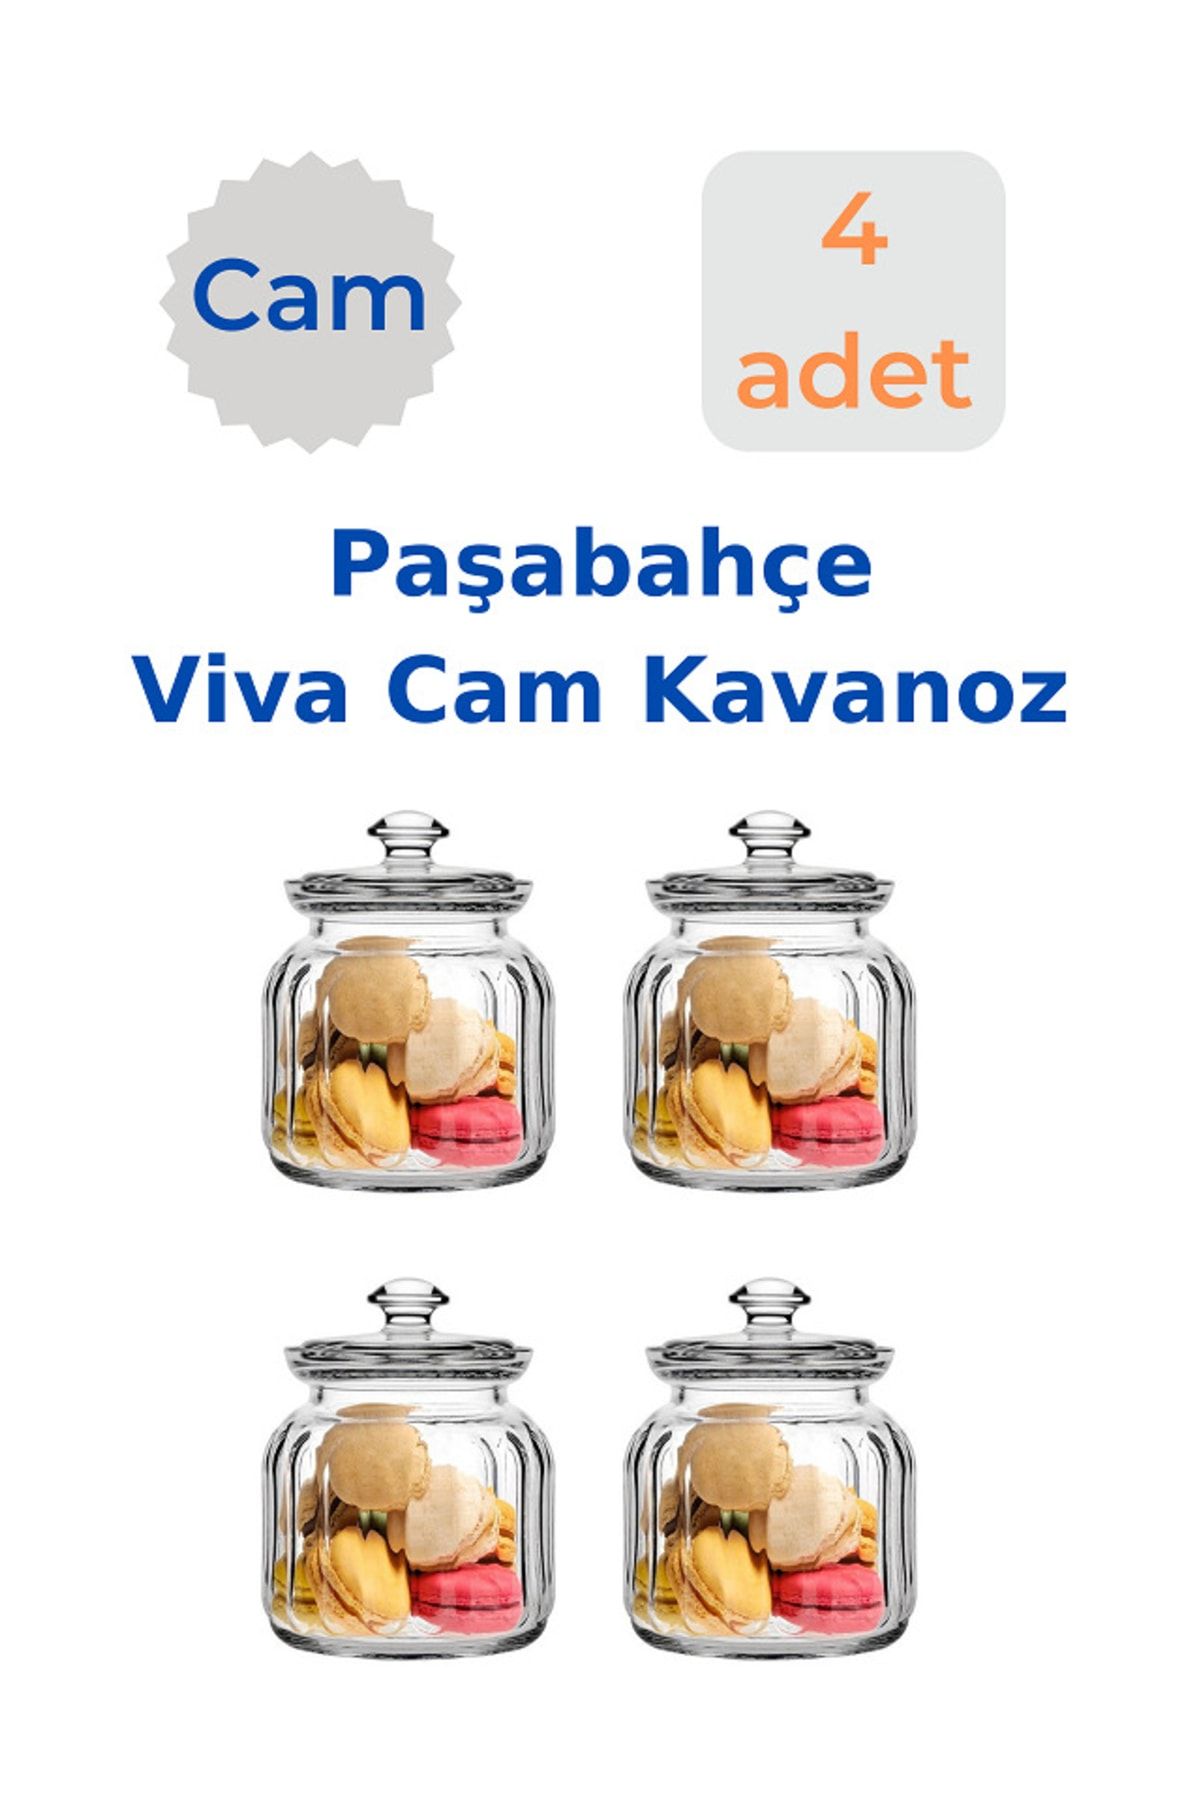 Paşabahçe 4 Adet Viva Cam Kavanoz Erzak Saklama Kabı 4x900 Cc